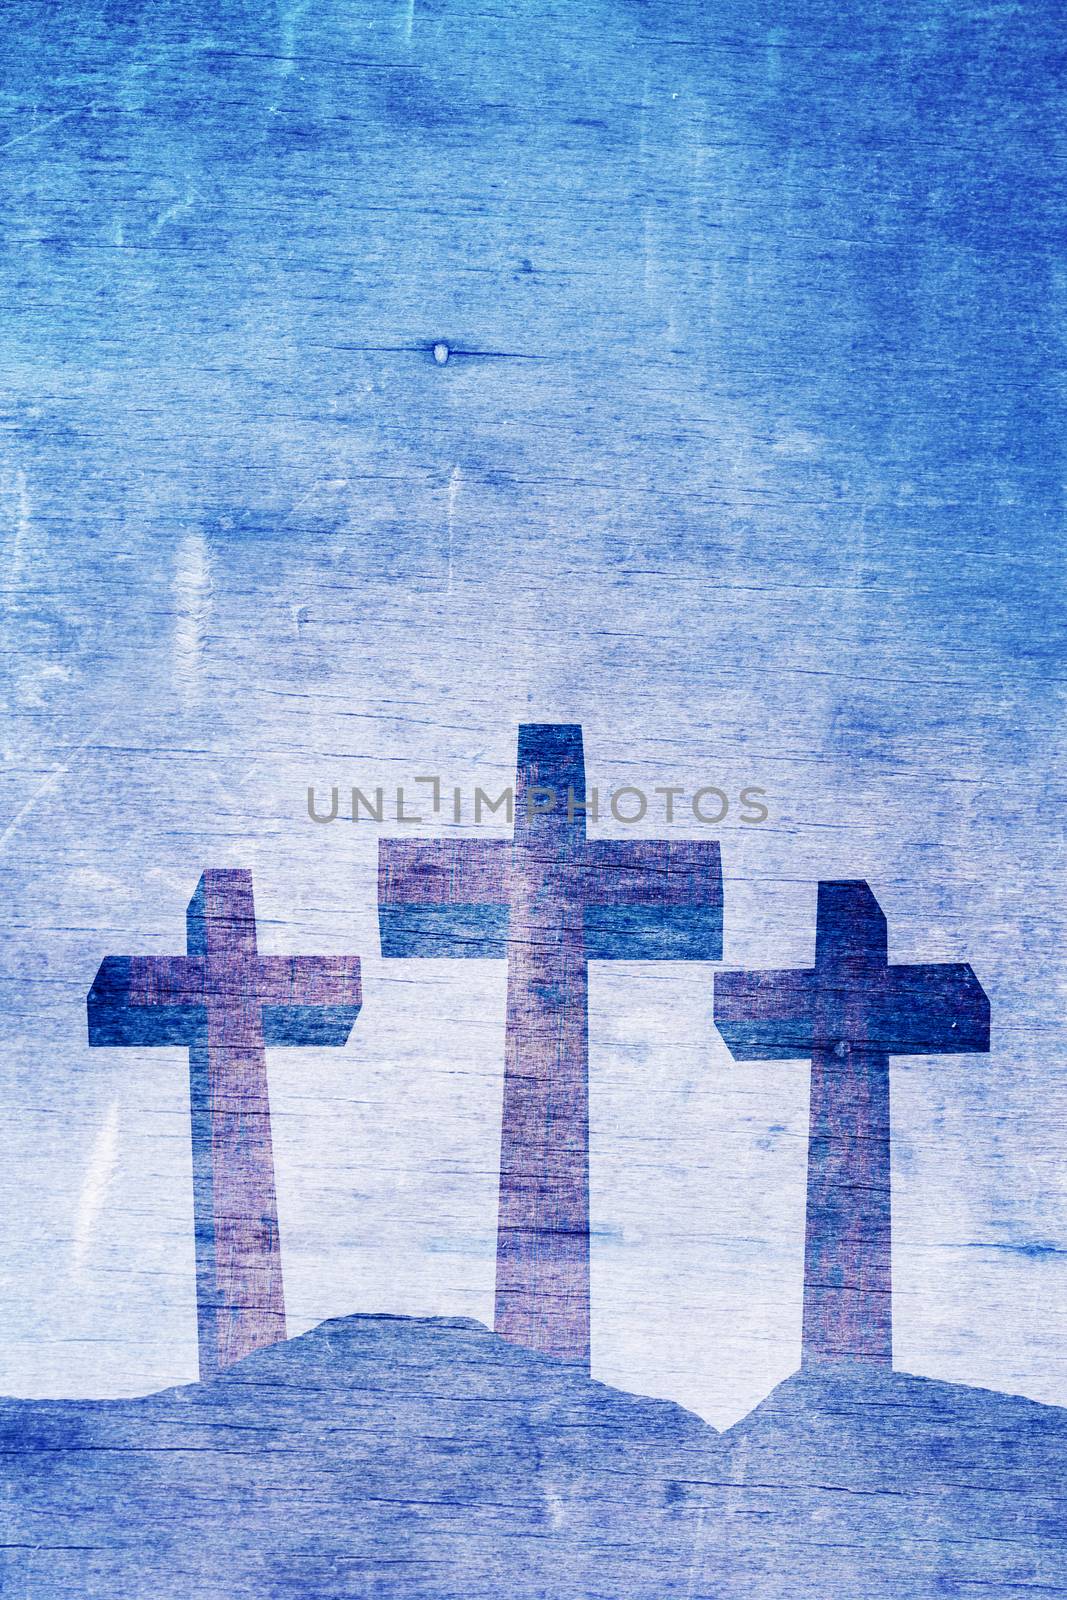 Three Christian crosses on Calvary aged landscape illustration